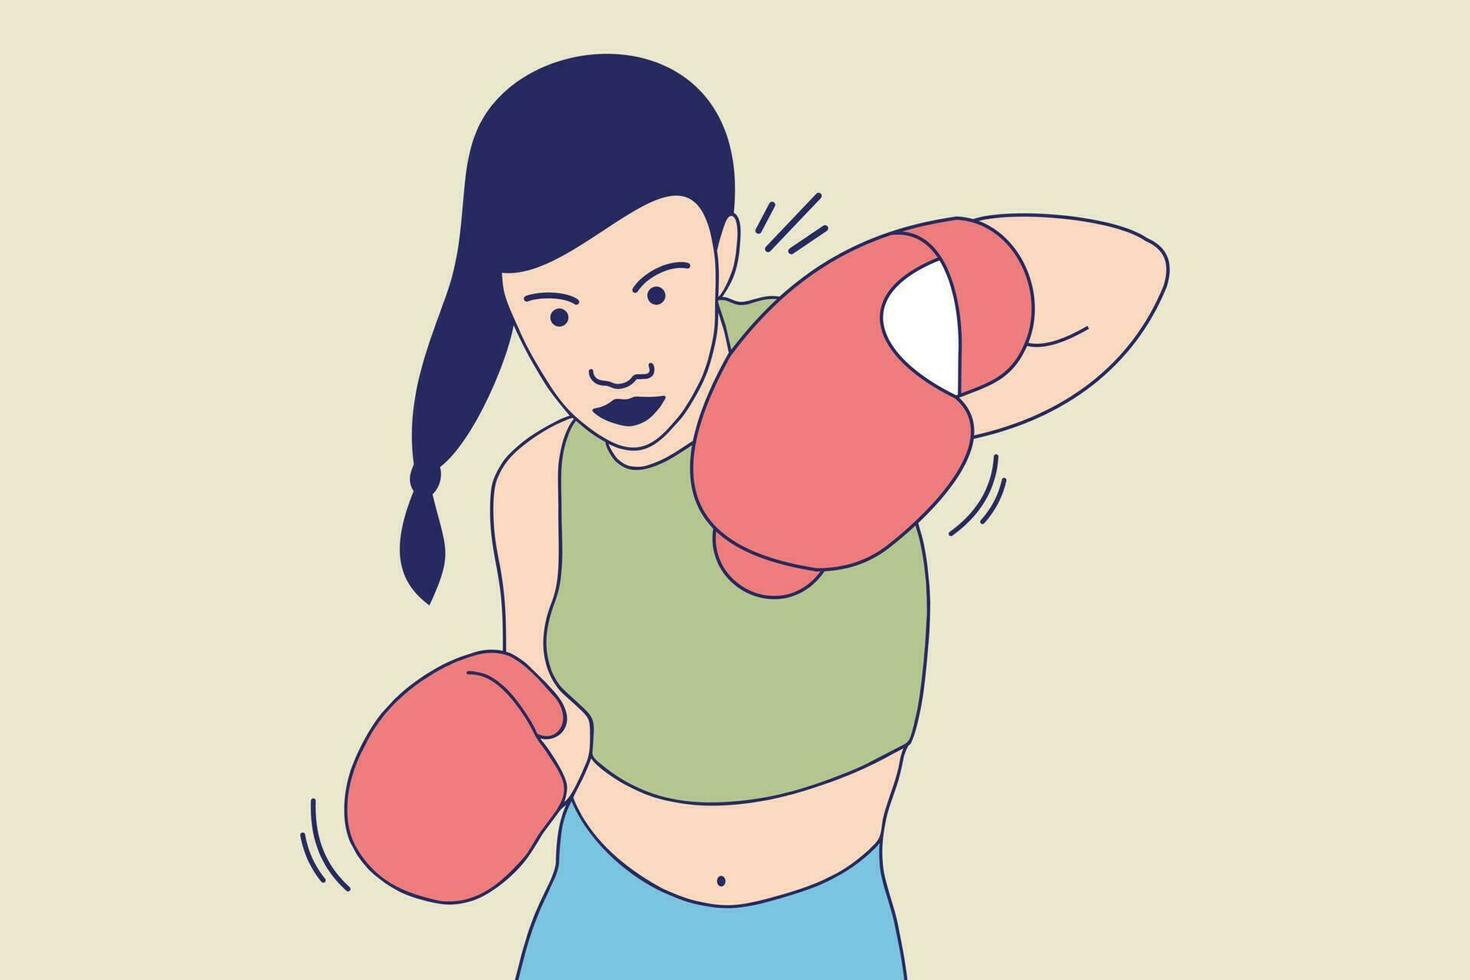 illustrationer av skön boxare kvinna kasta en stansa med boxning handske vektor